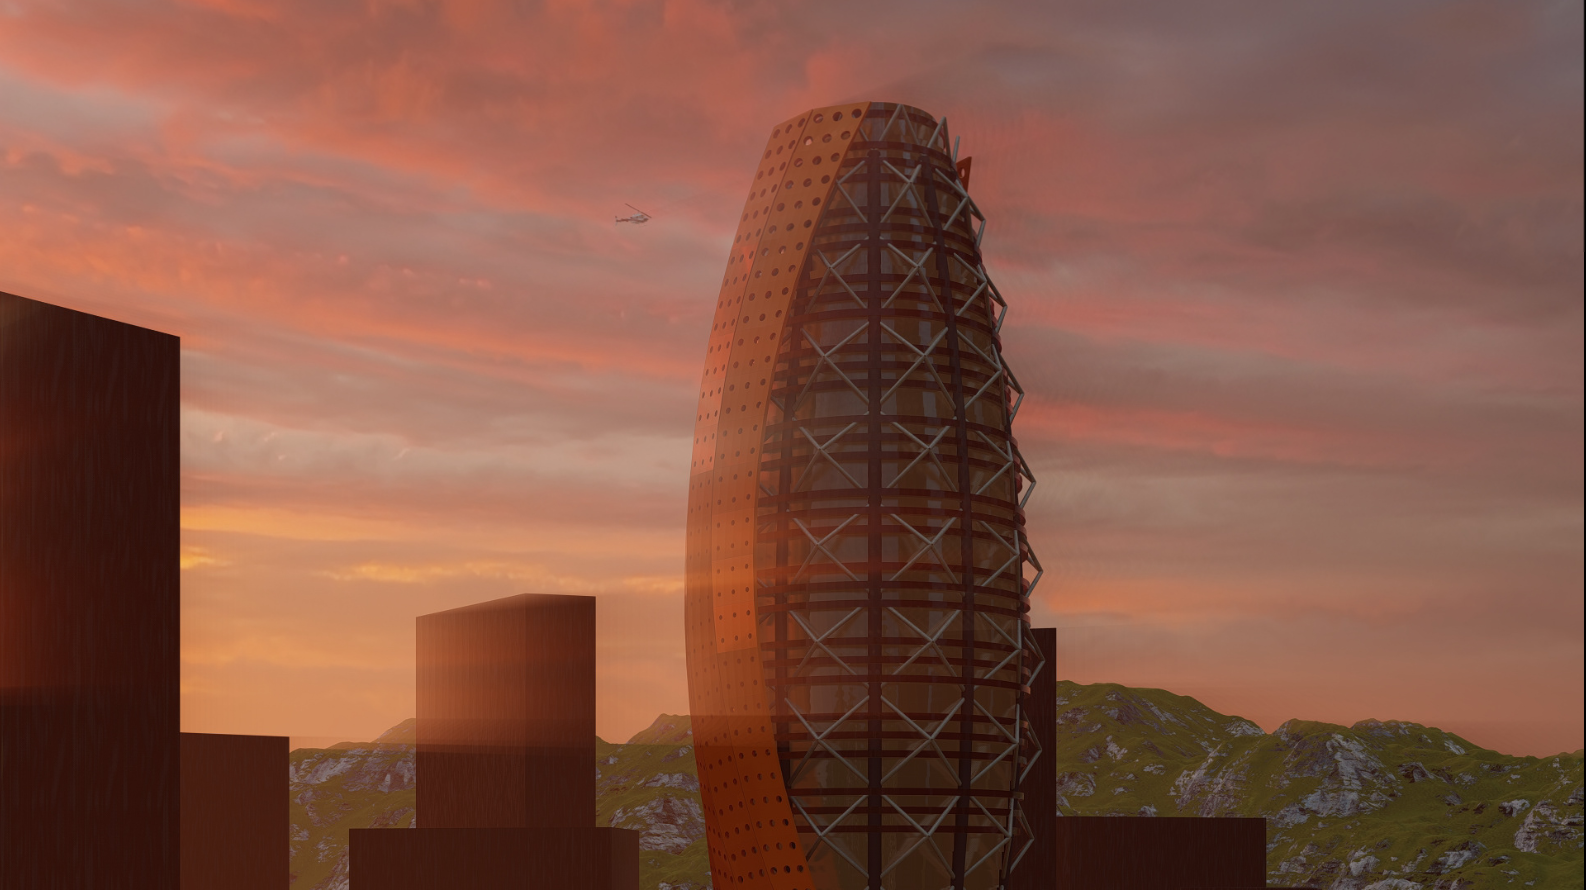 Parametric skyscraper Tower Shell Design against a sunset